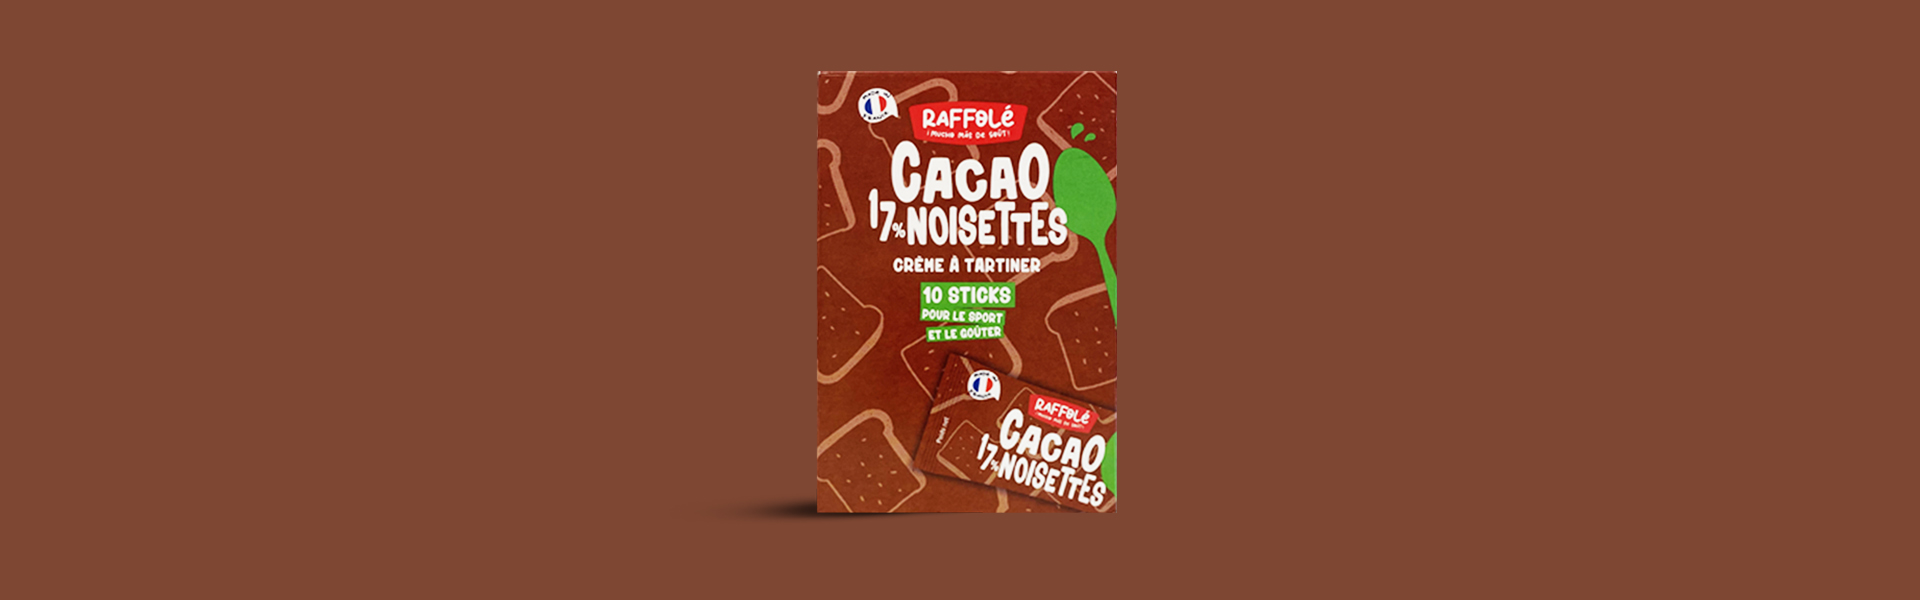 Raffolé-slide-stick-cacao-noisettes